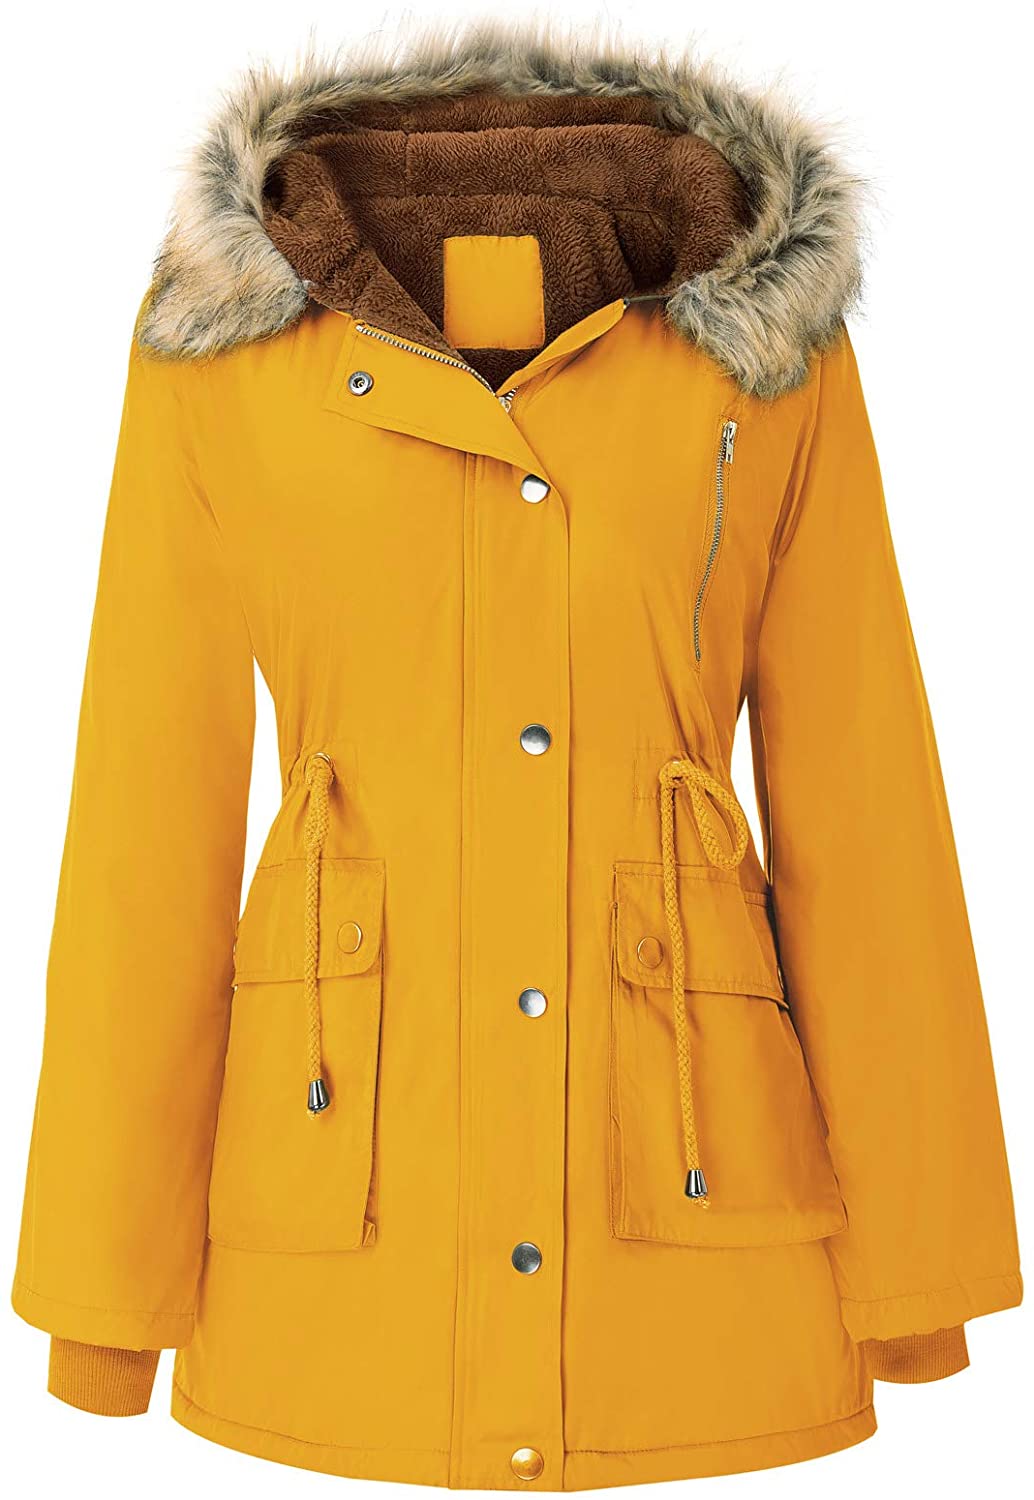 GRACE KARIN Womens Hooded Fleece Line Coats Parkas Faux Fur Jackets with Pockets 